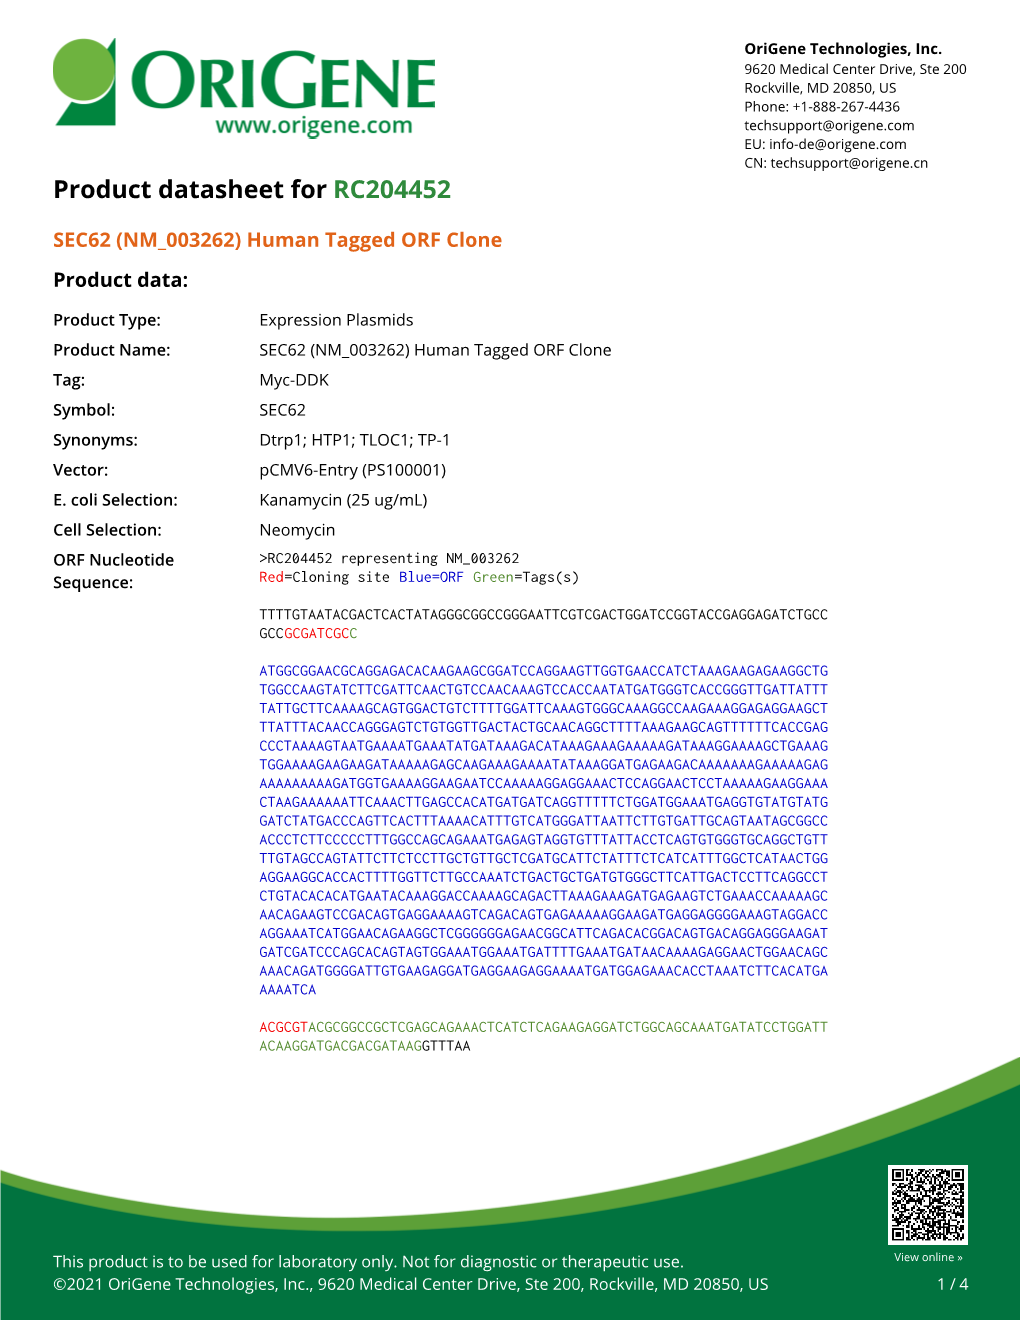 SEC62 (NM 003262) Human Tagged ORF Clone – RC204452 | Origene